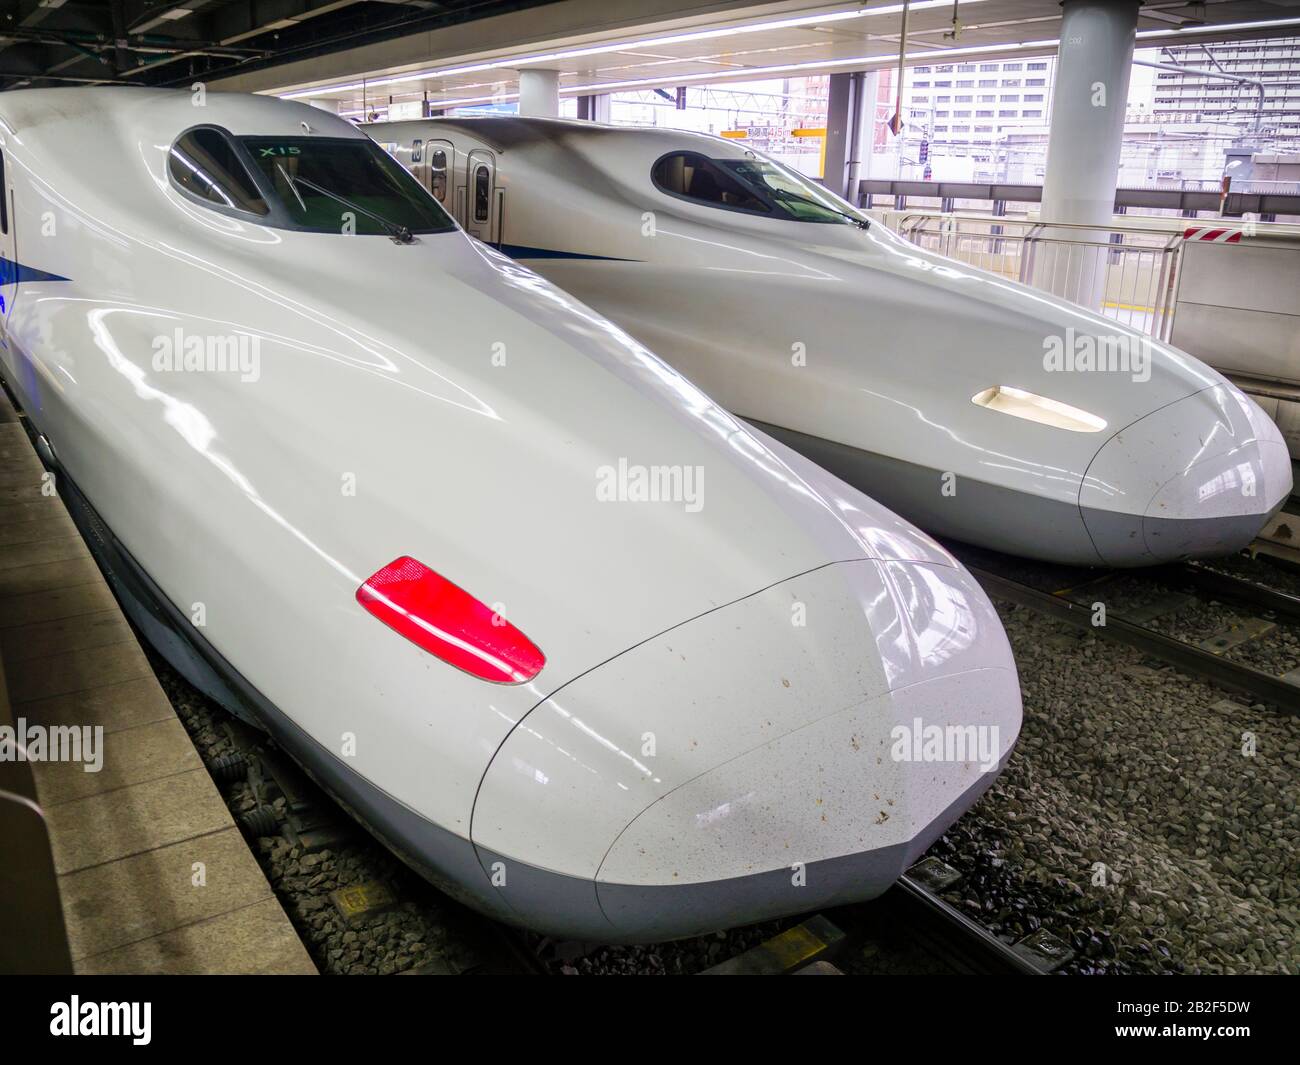 Tokyo, Japan - 13 Oct 2018: two N700 series Shinkansen bullet trains of the Tokaido line to Kyoto inside Tokyo train station. Stock Photo